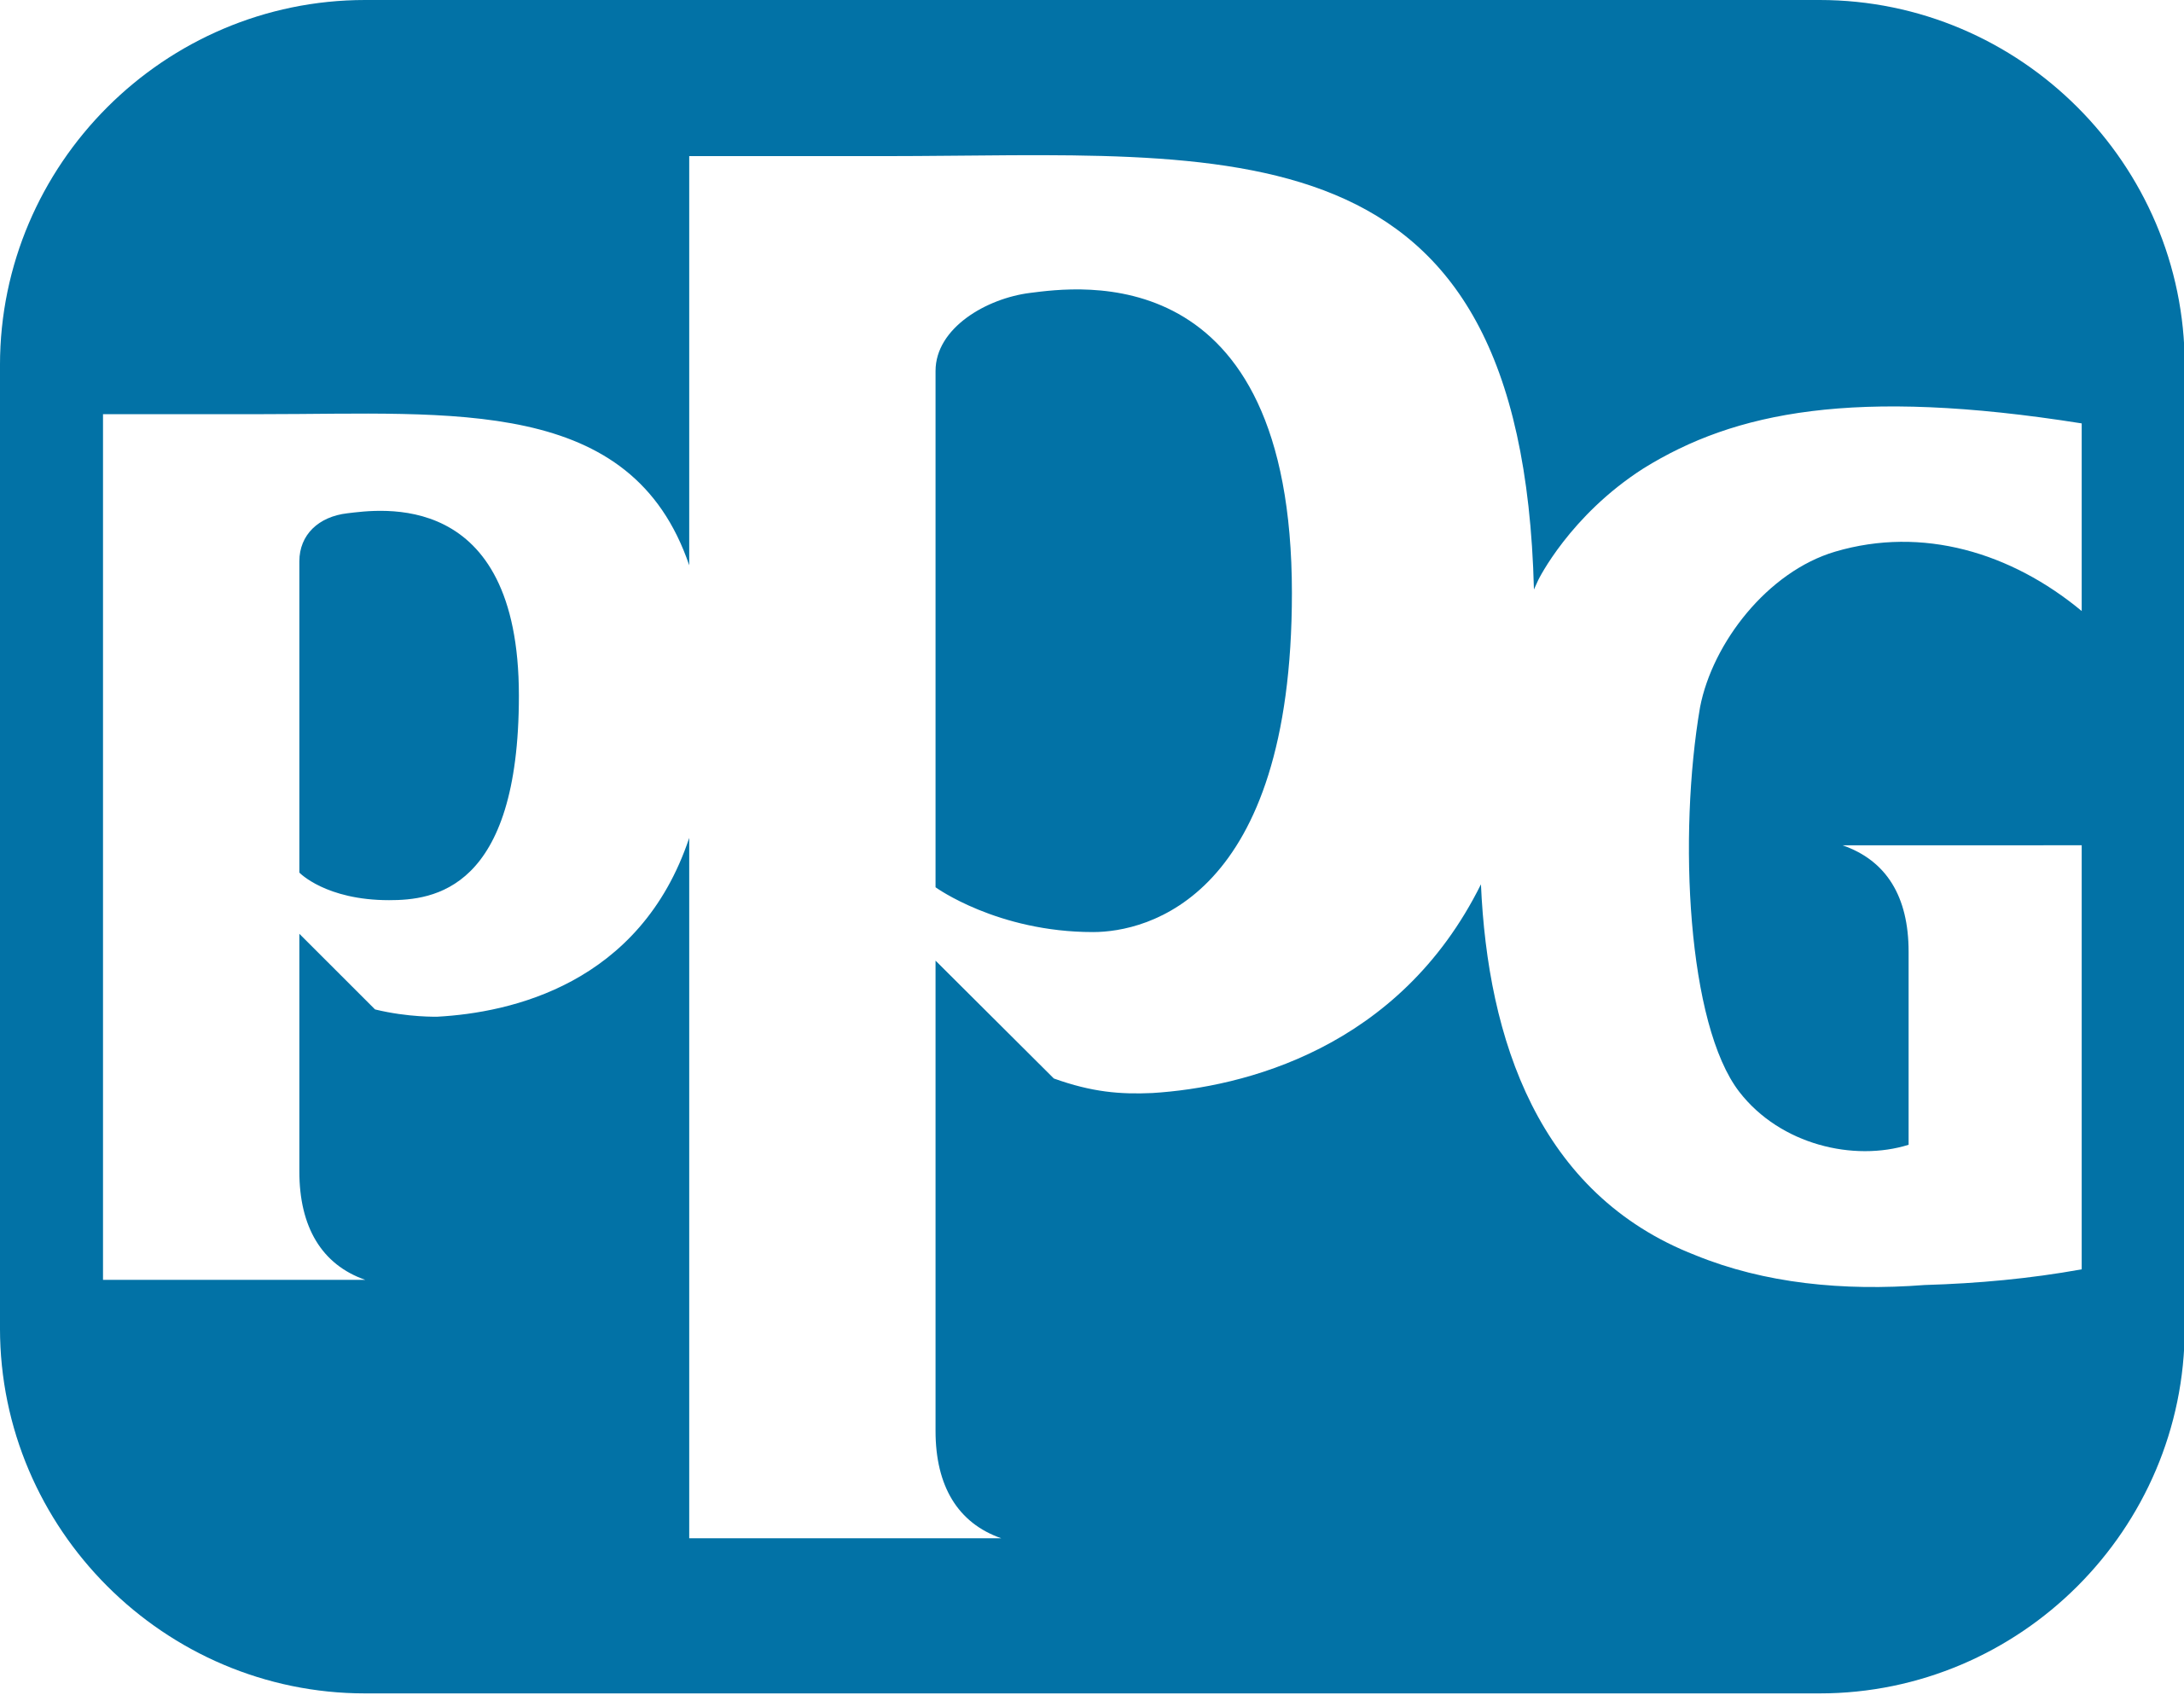 2560px-ppg_logo.svg